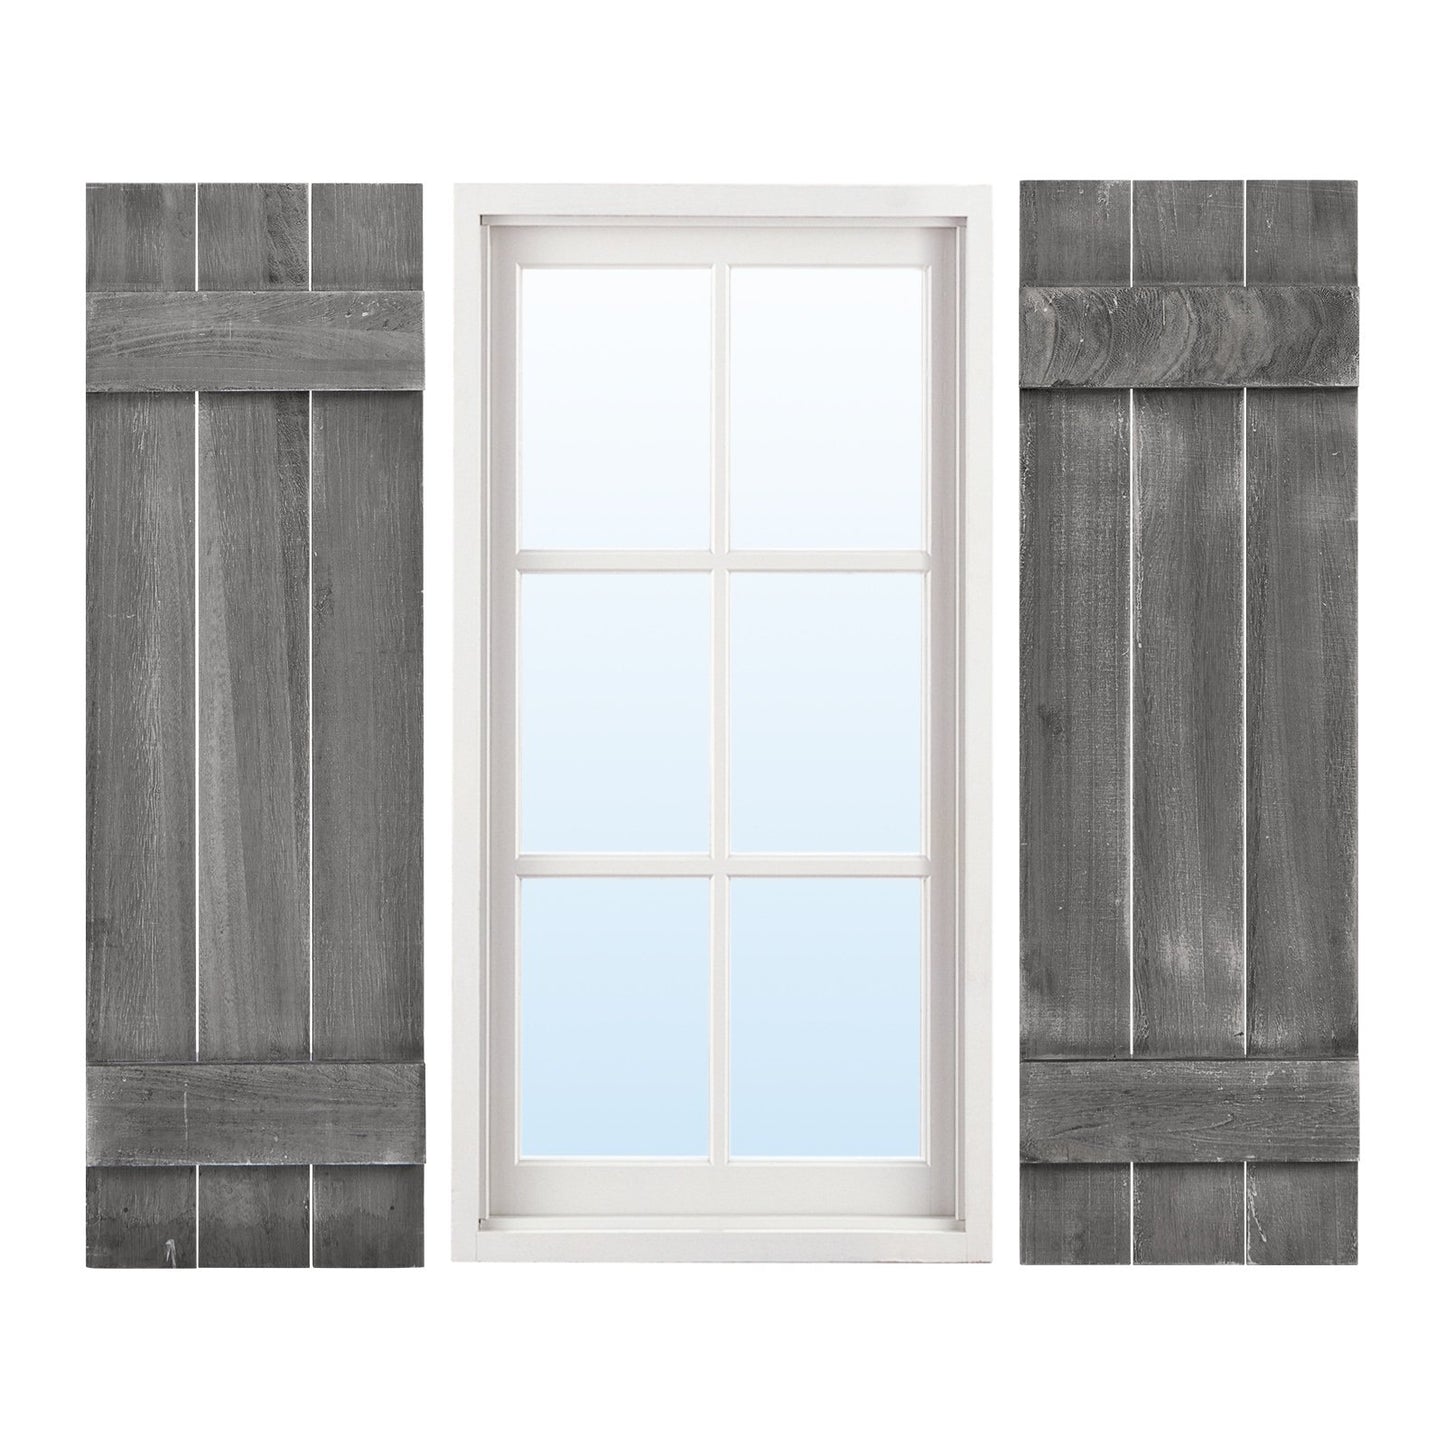 36 x 11 Inch Farmhouse Paulownia Wood Window Shutters Set of 2 for Windows, Dark Gray at Gallery Canada